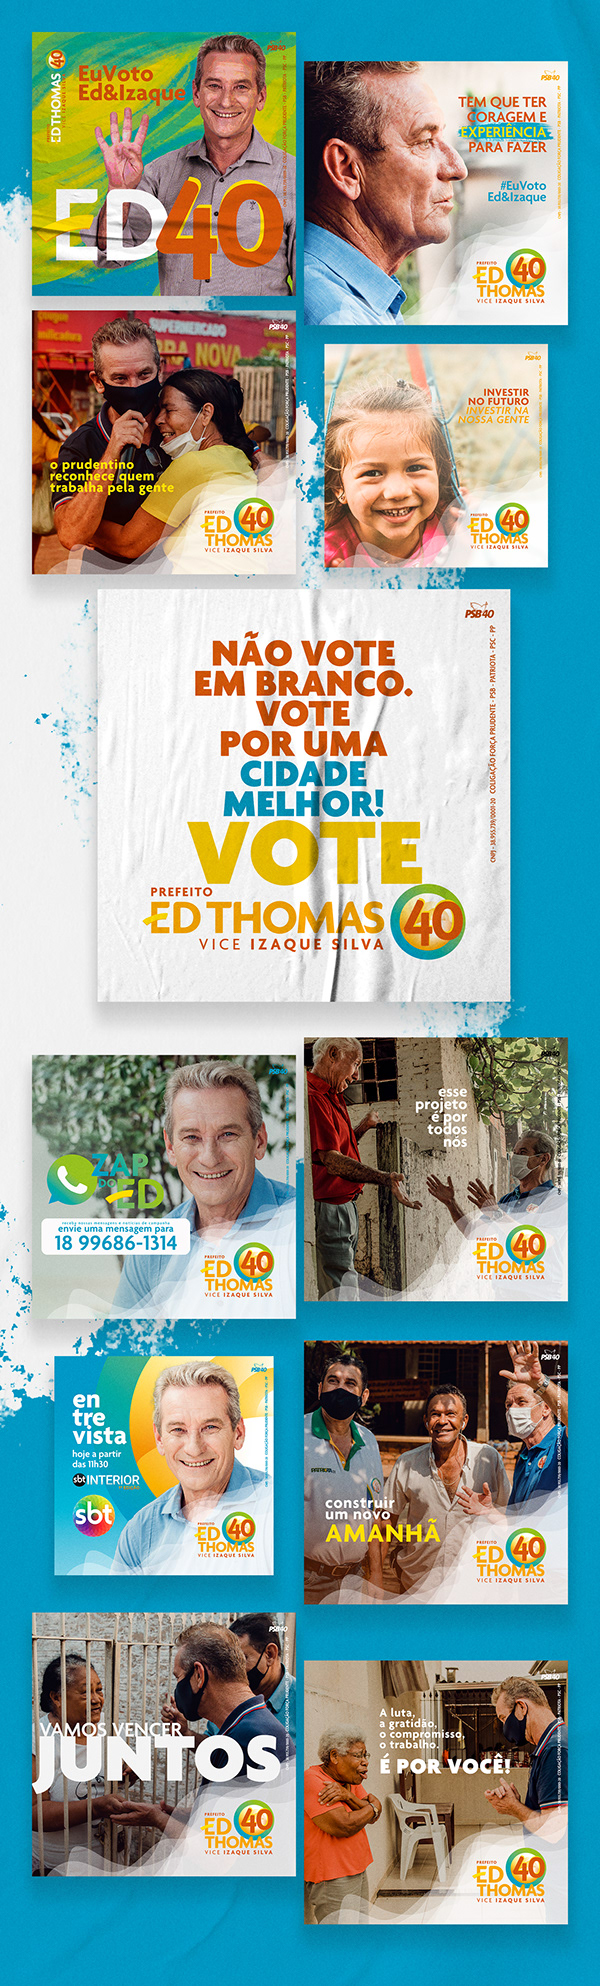 Social Media Eleitoral Ed Thomas